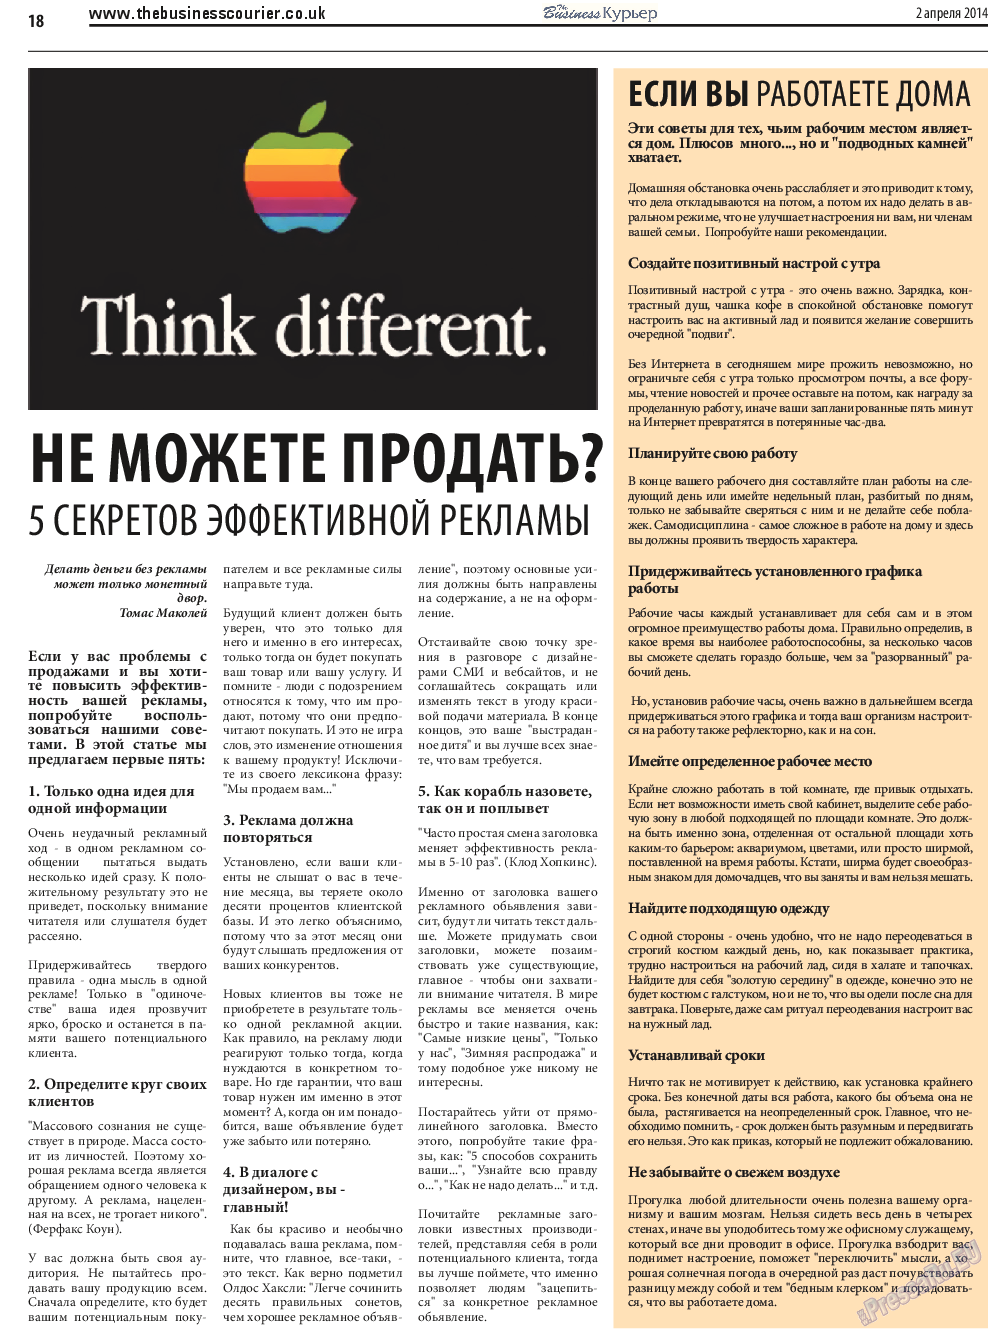 The Business Курьер, газета. 2014 №22 стр.18